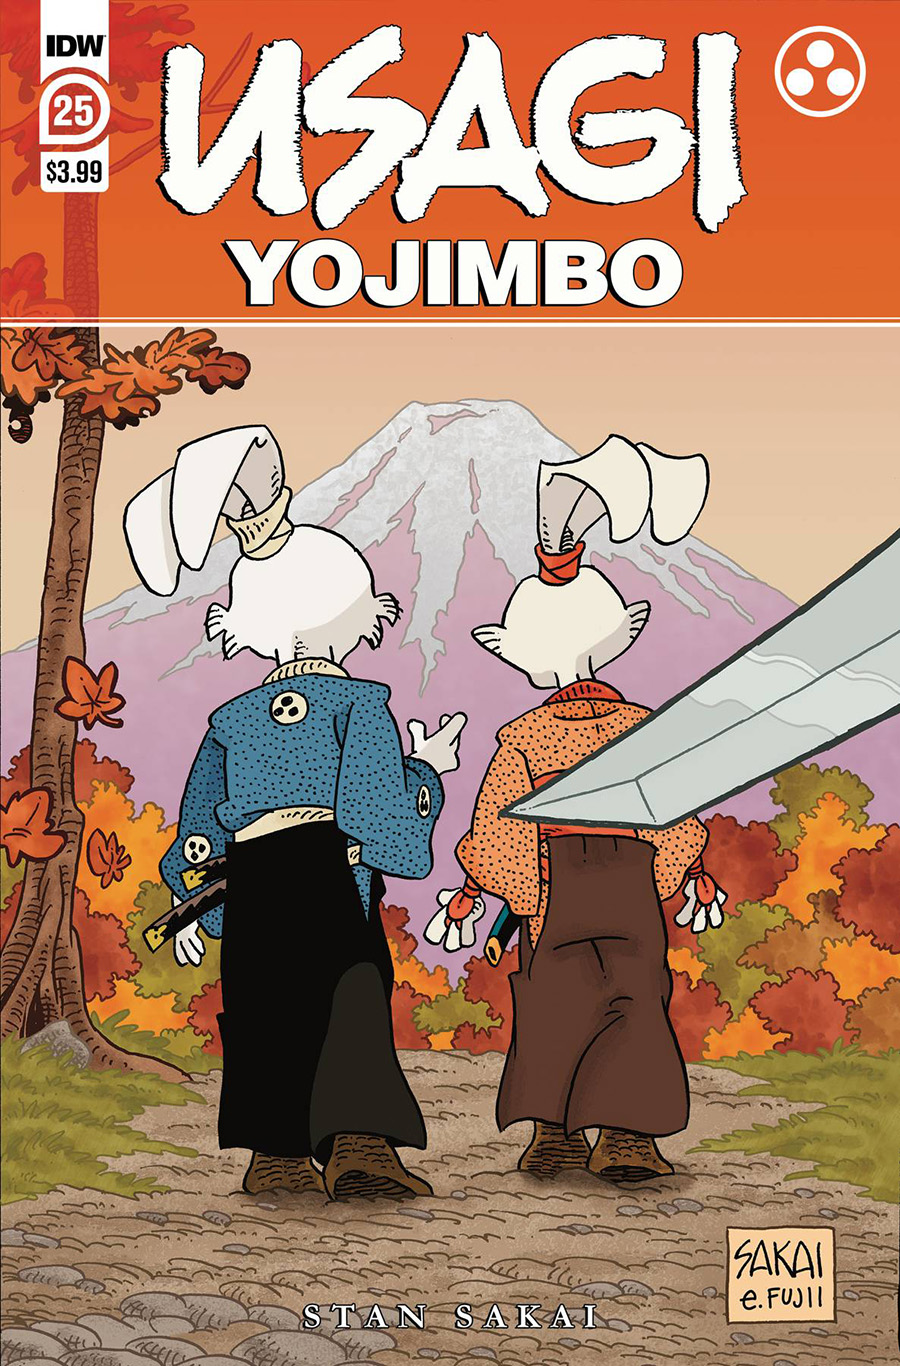 Usagi Yojimbo Vol 4 #25 Cover A Regular Stan Sakai Cover